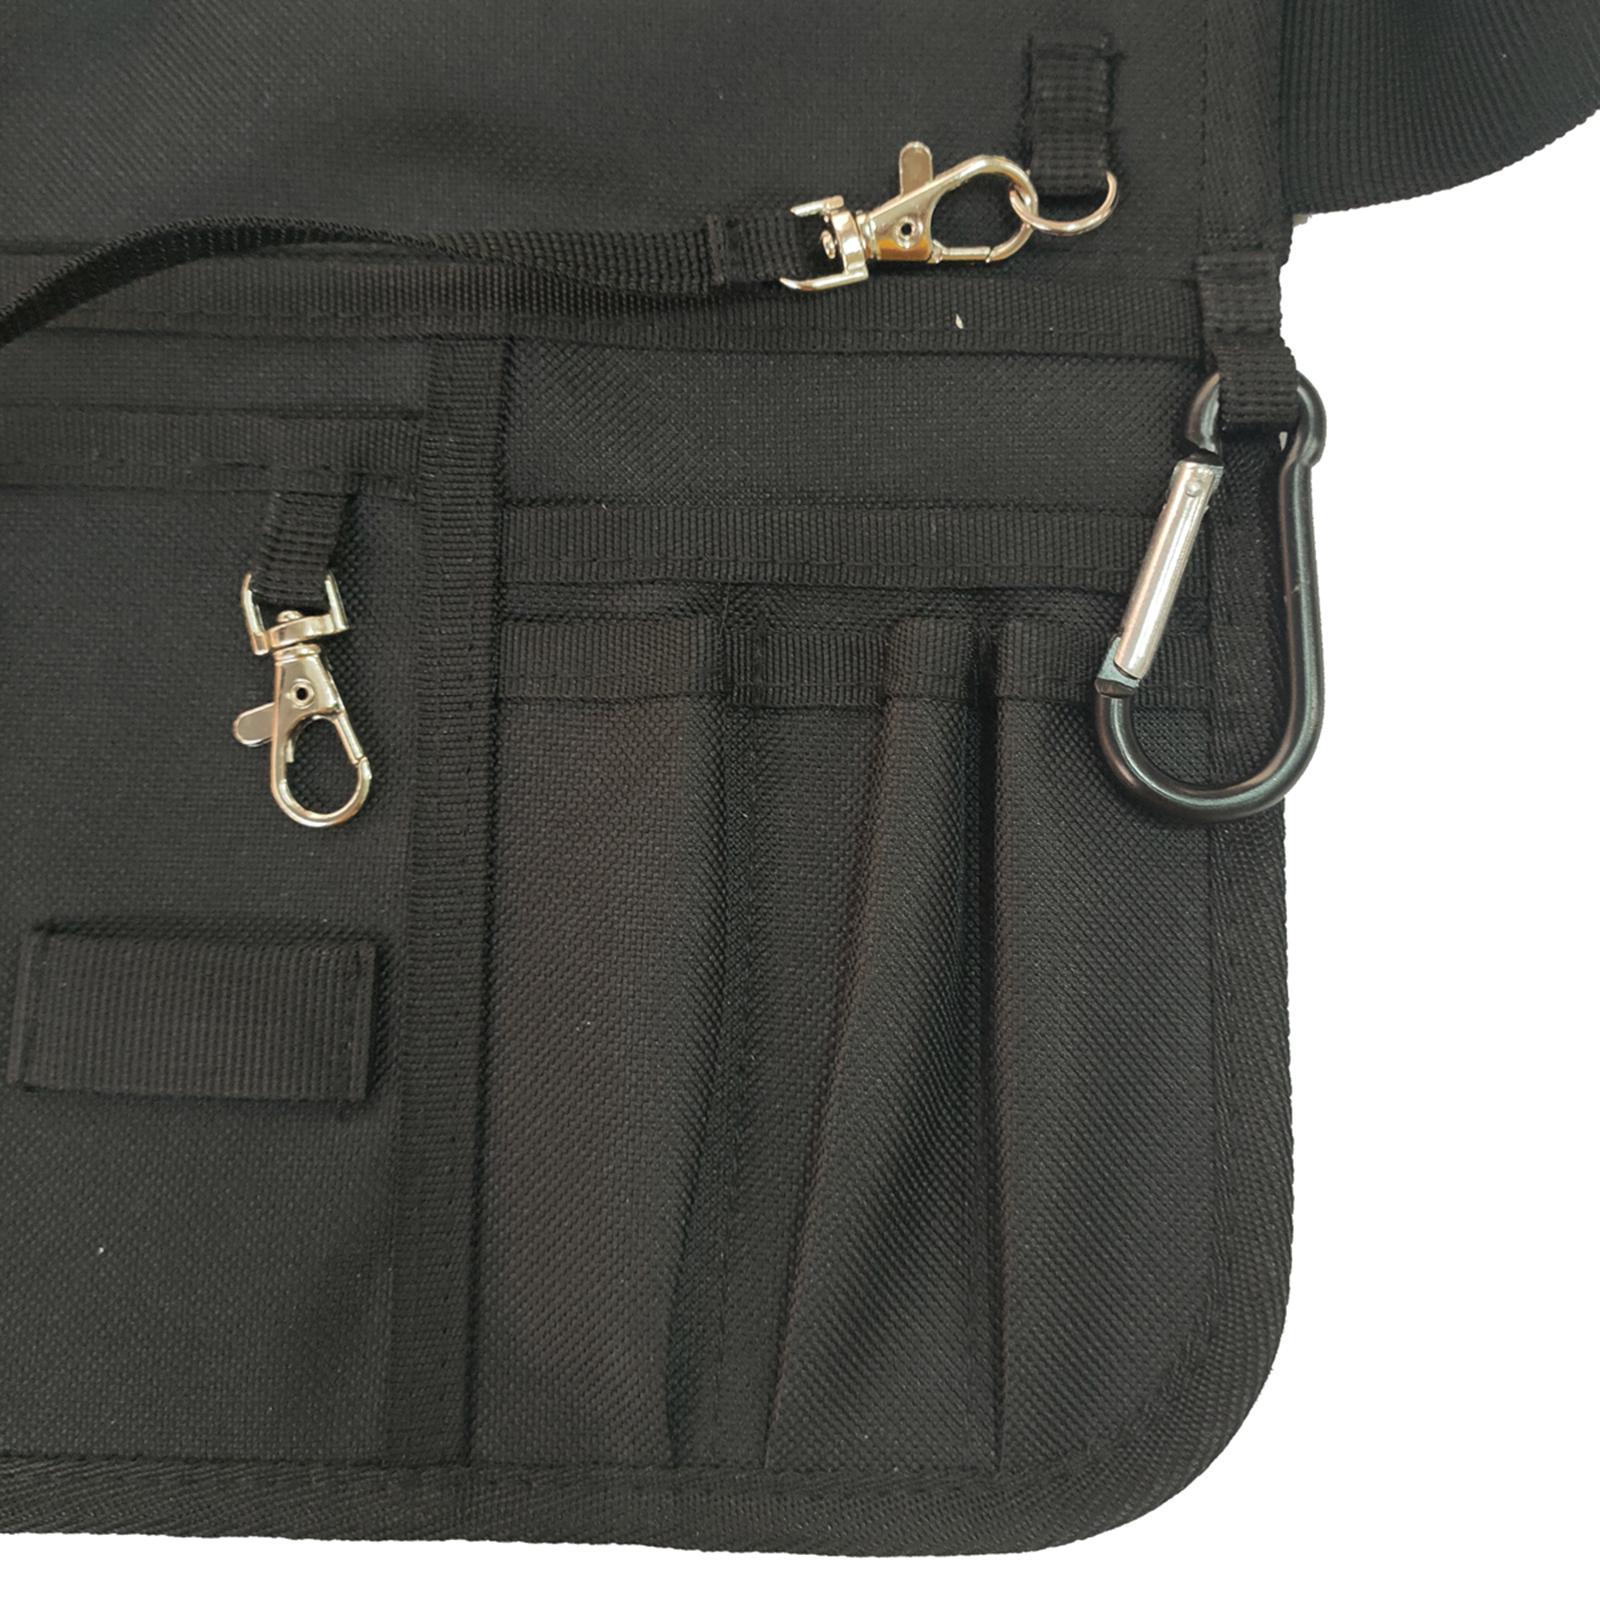 Fanny Pack Storage Pocket Organizer Multifunctional Waist Bag for Women Men Work Supplies